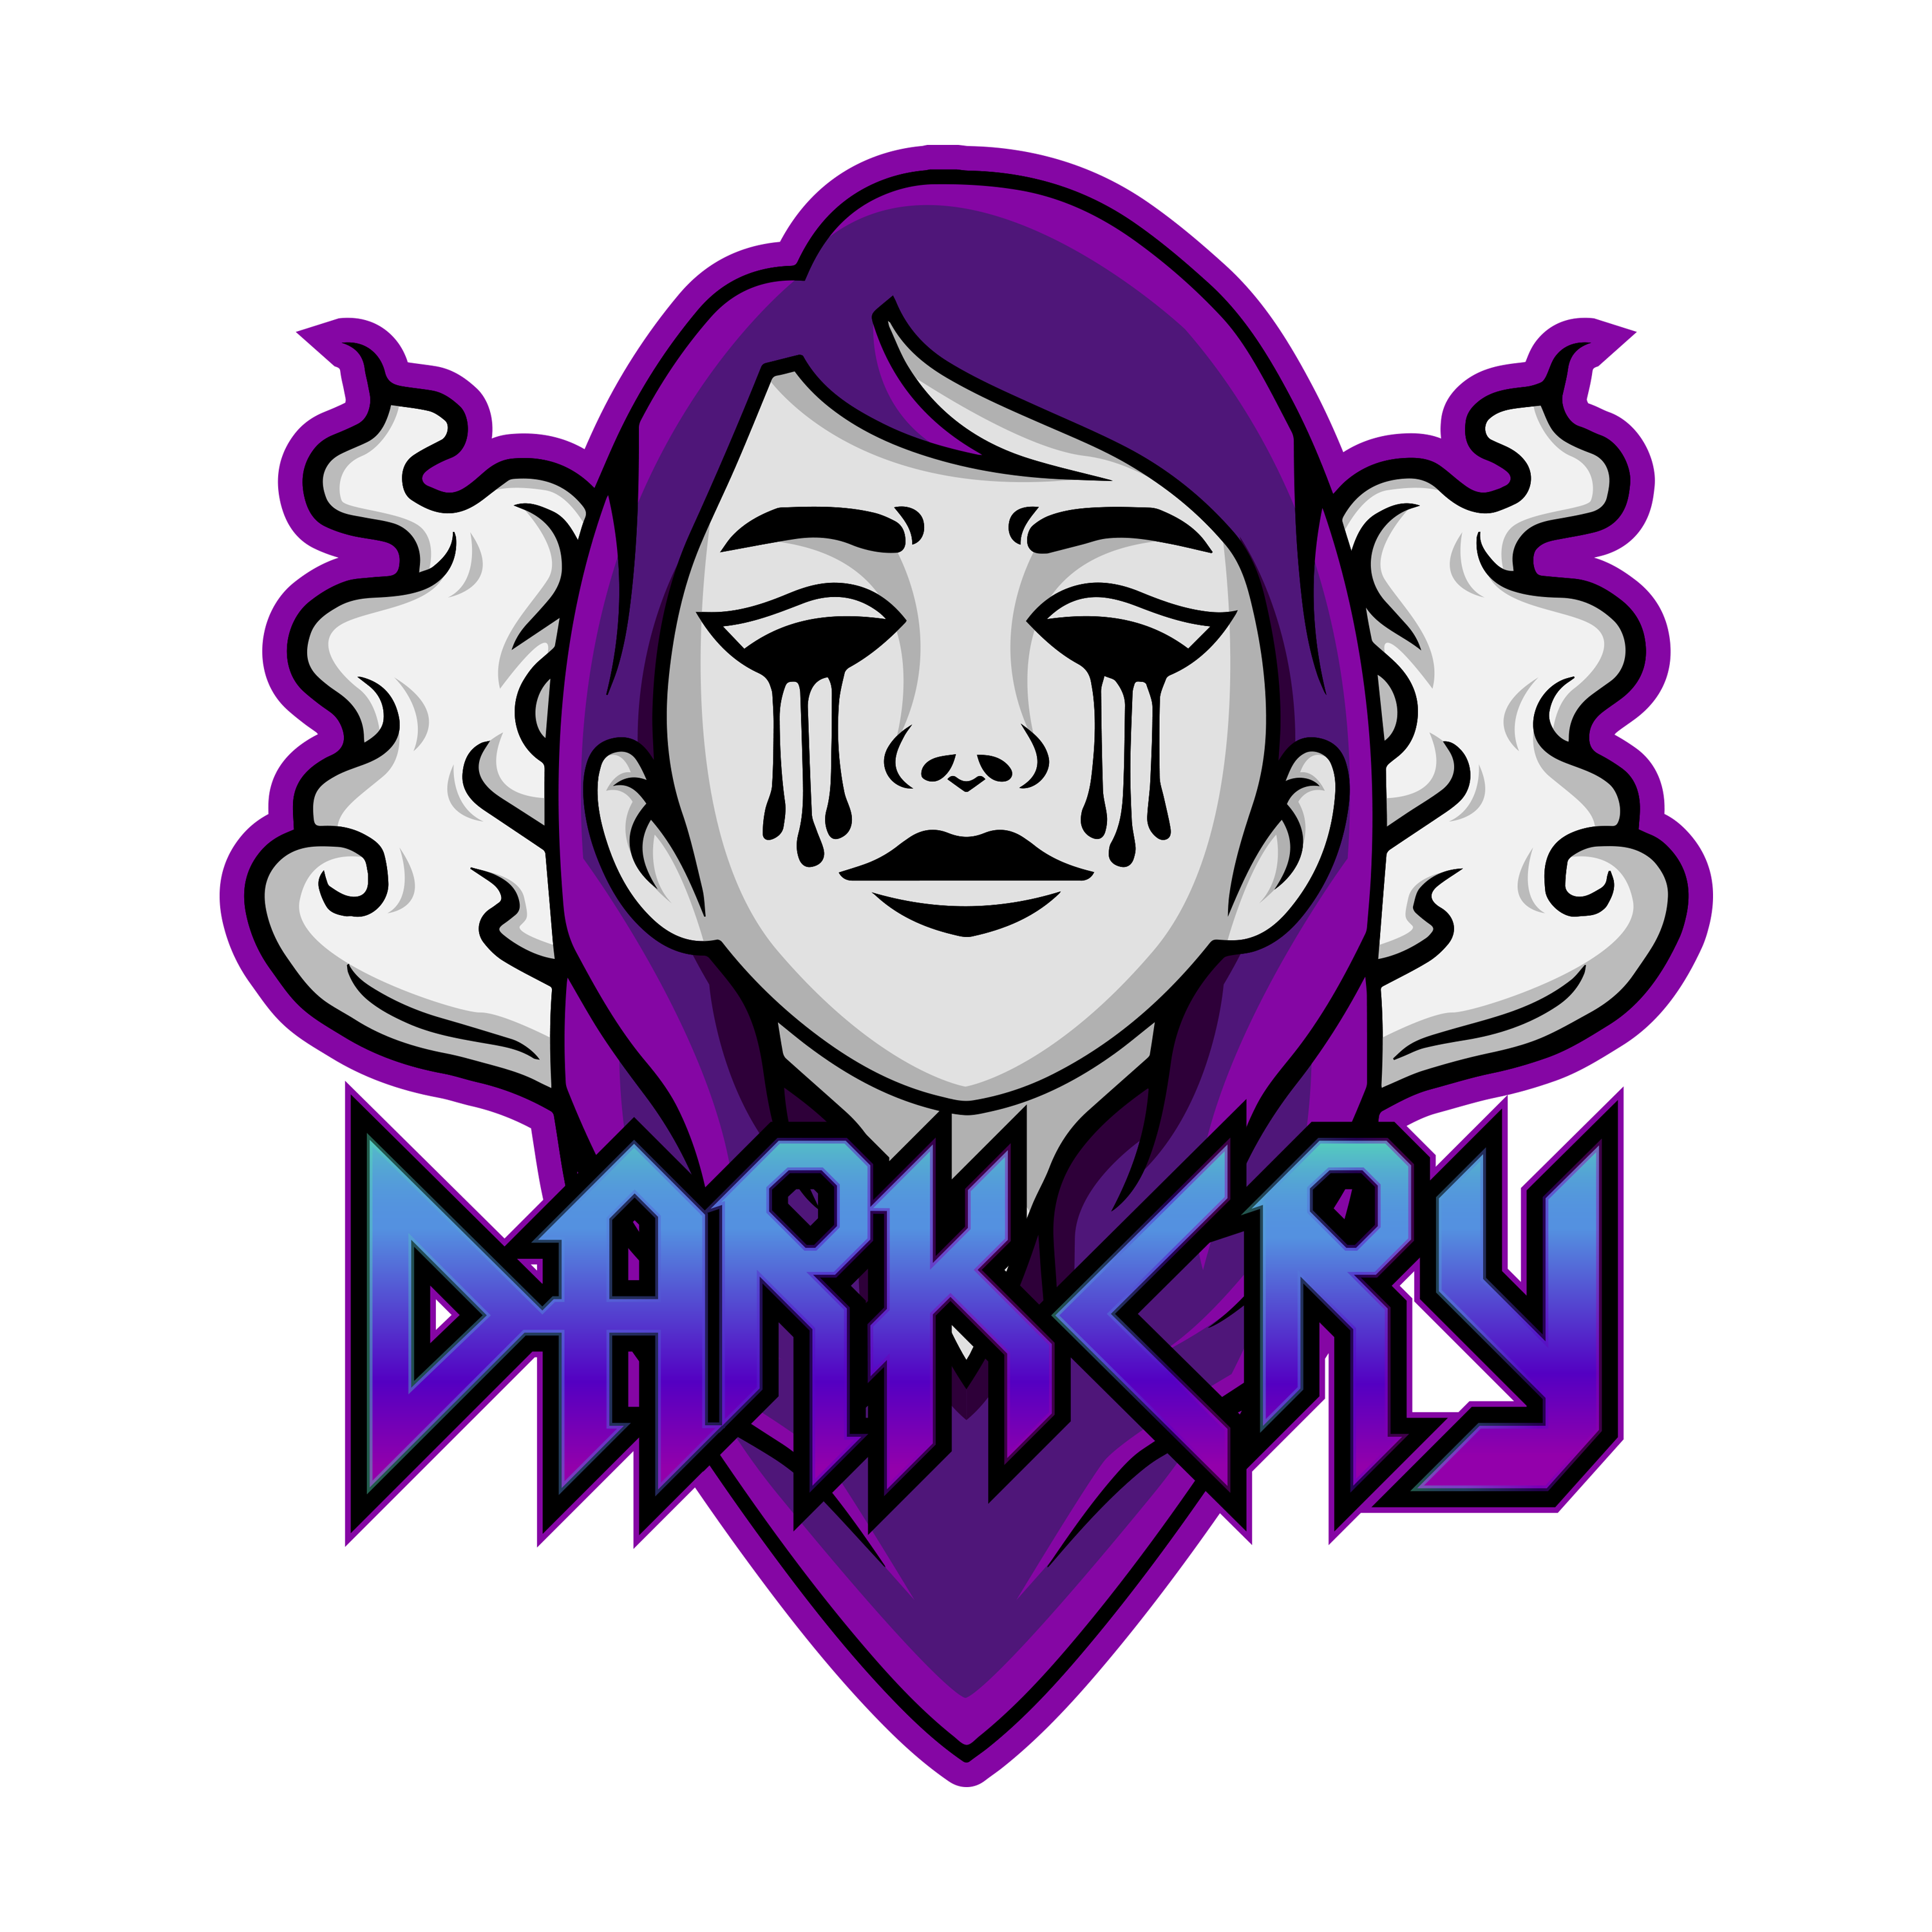 Team DarkCry